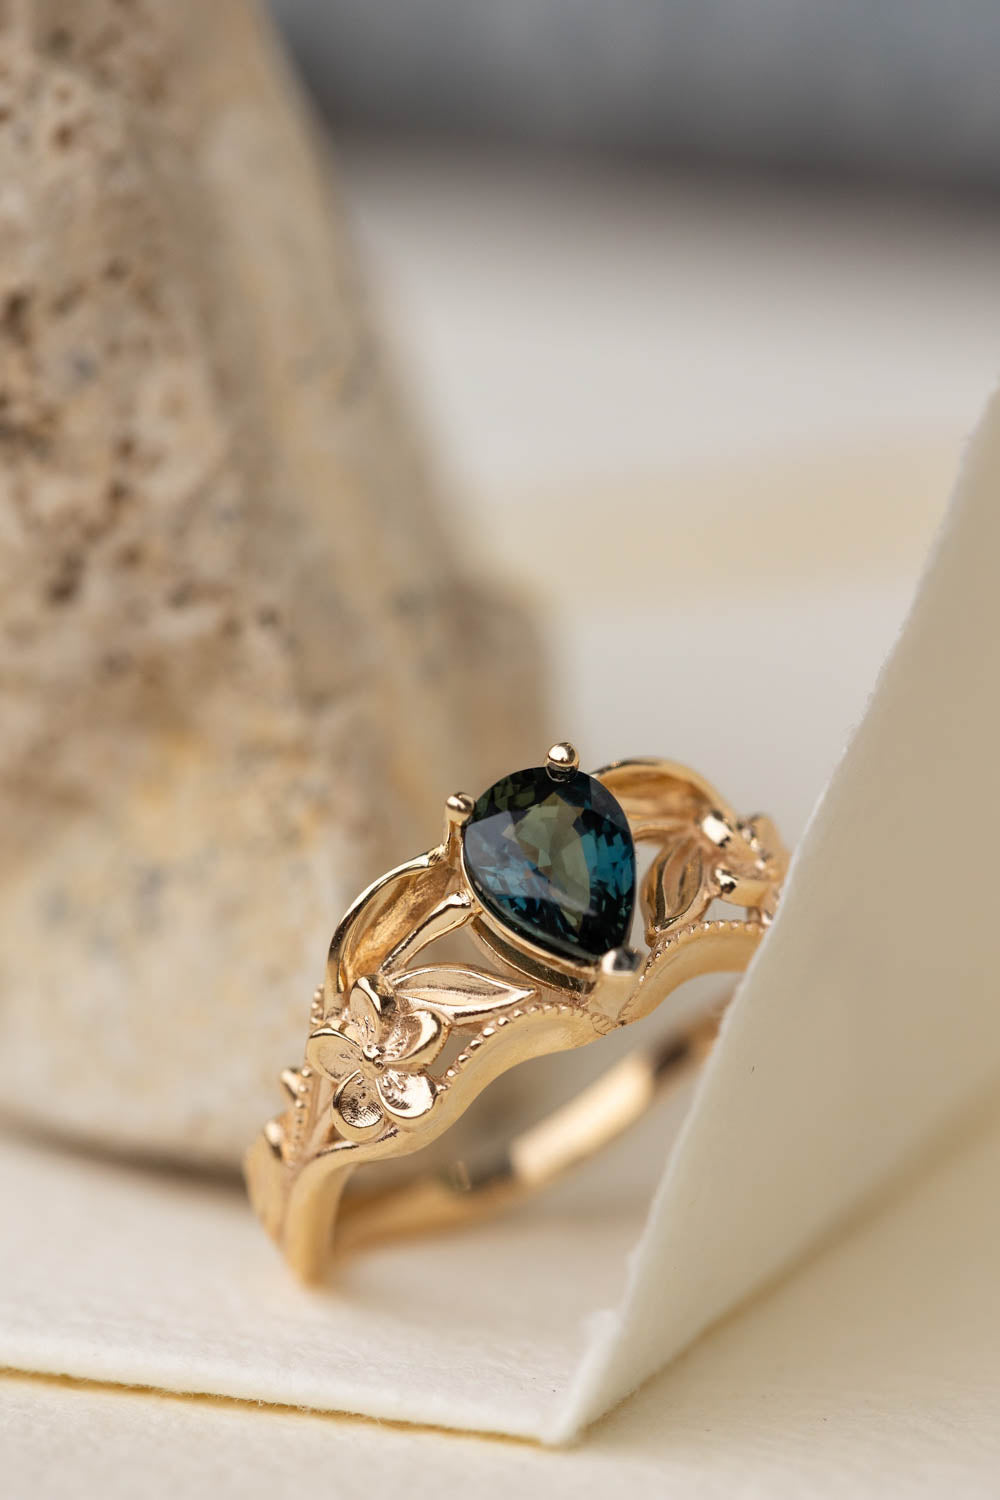 Genuine teal sapphire engagement ring, gold flower proposal ring / Eloise - Eden Garden Jewelry™